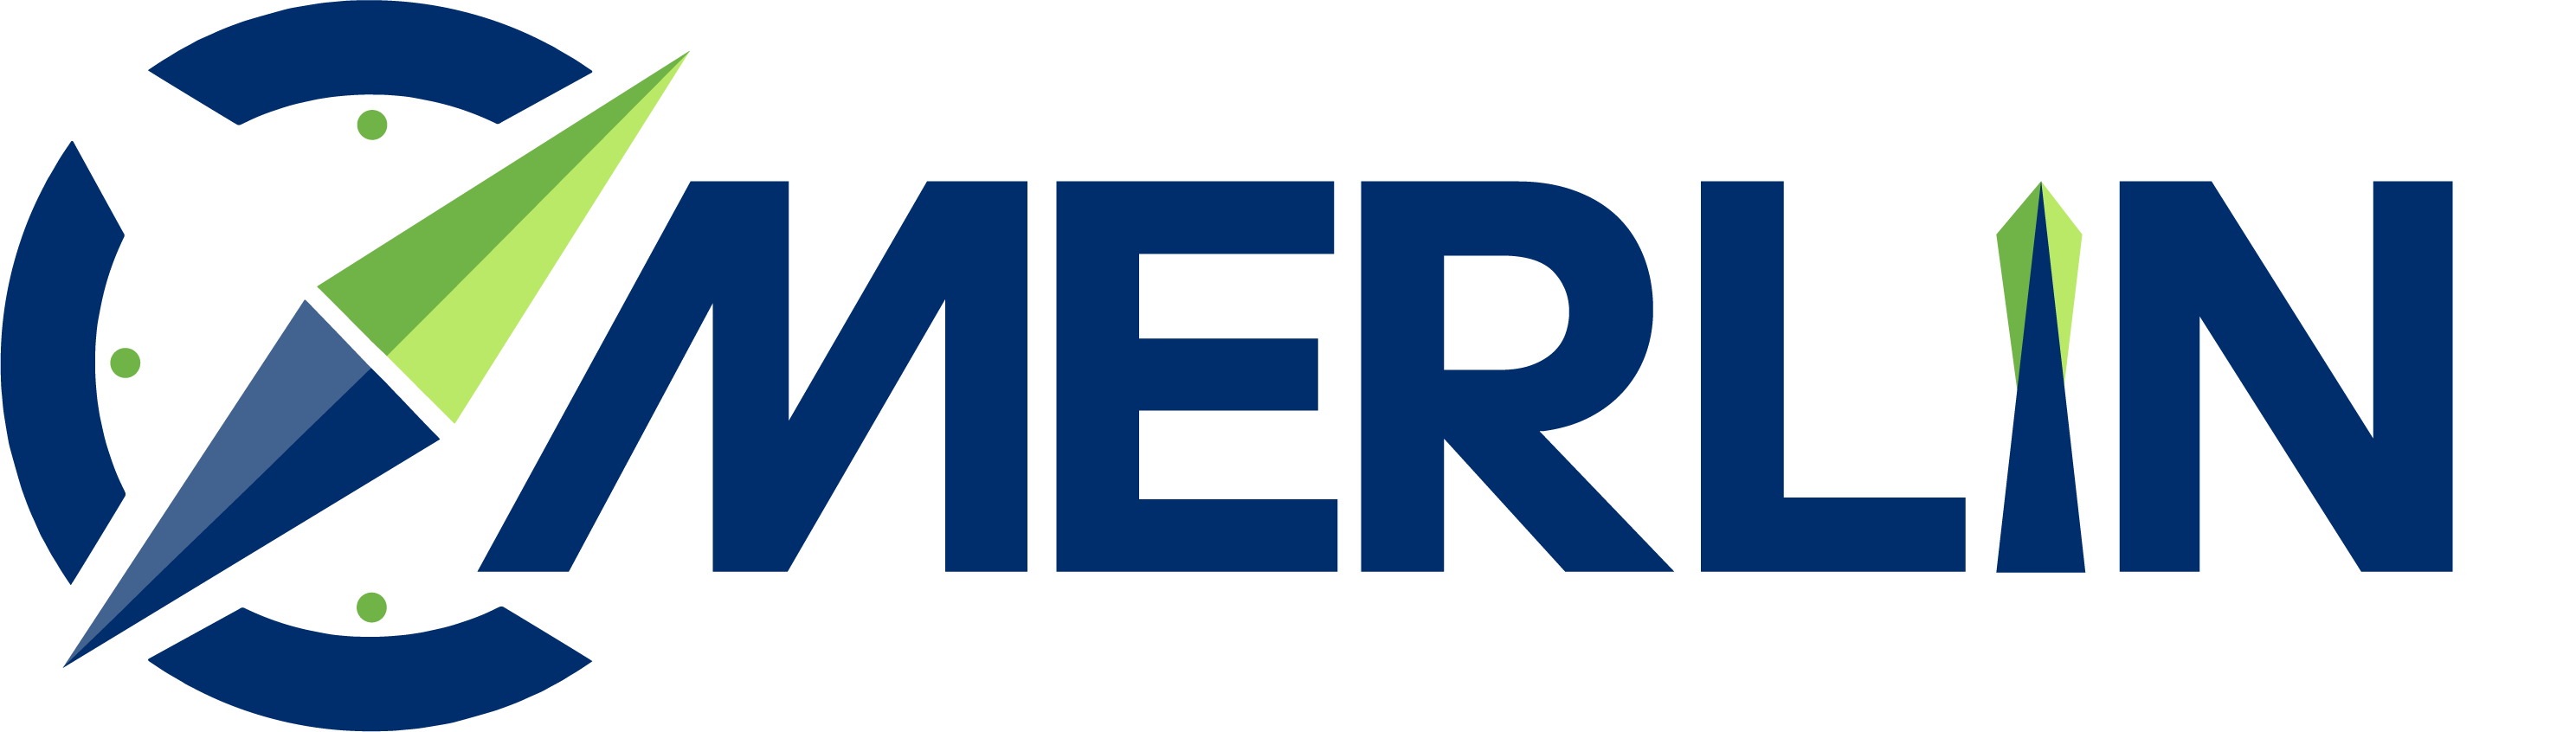 merlin-logo